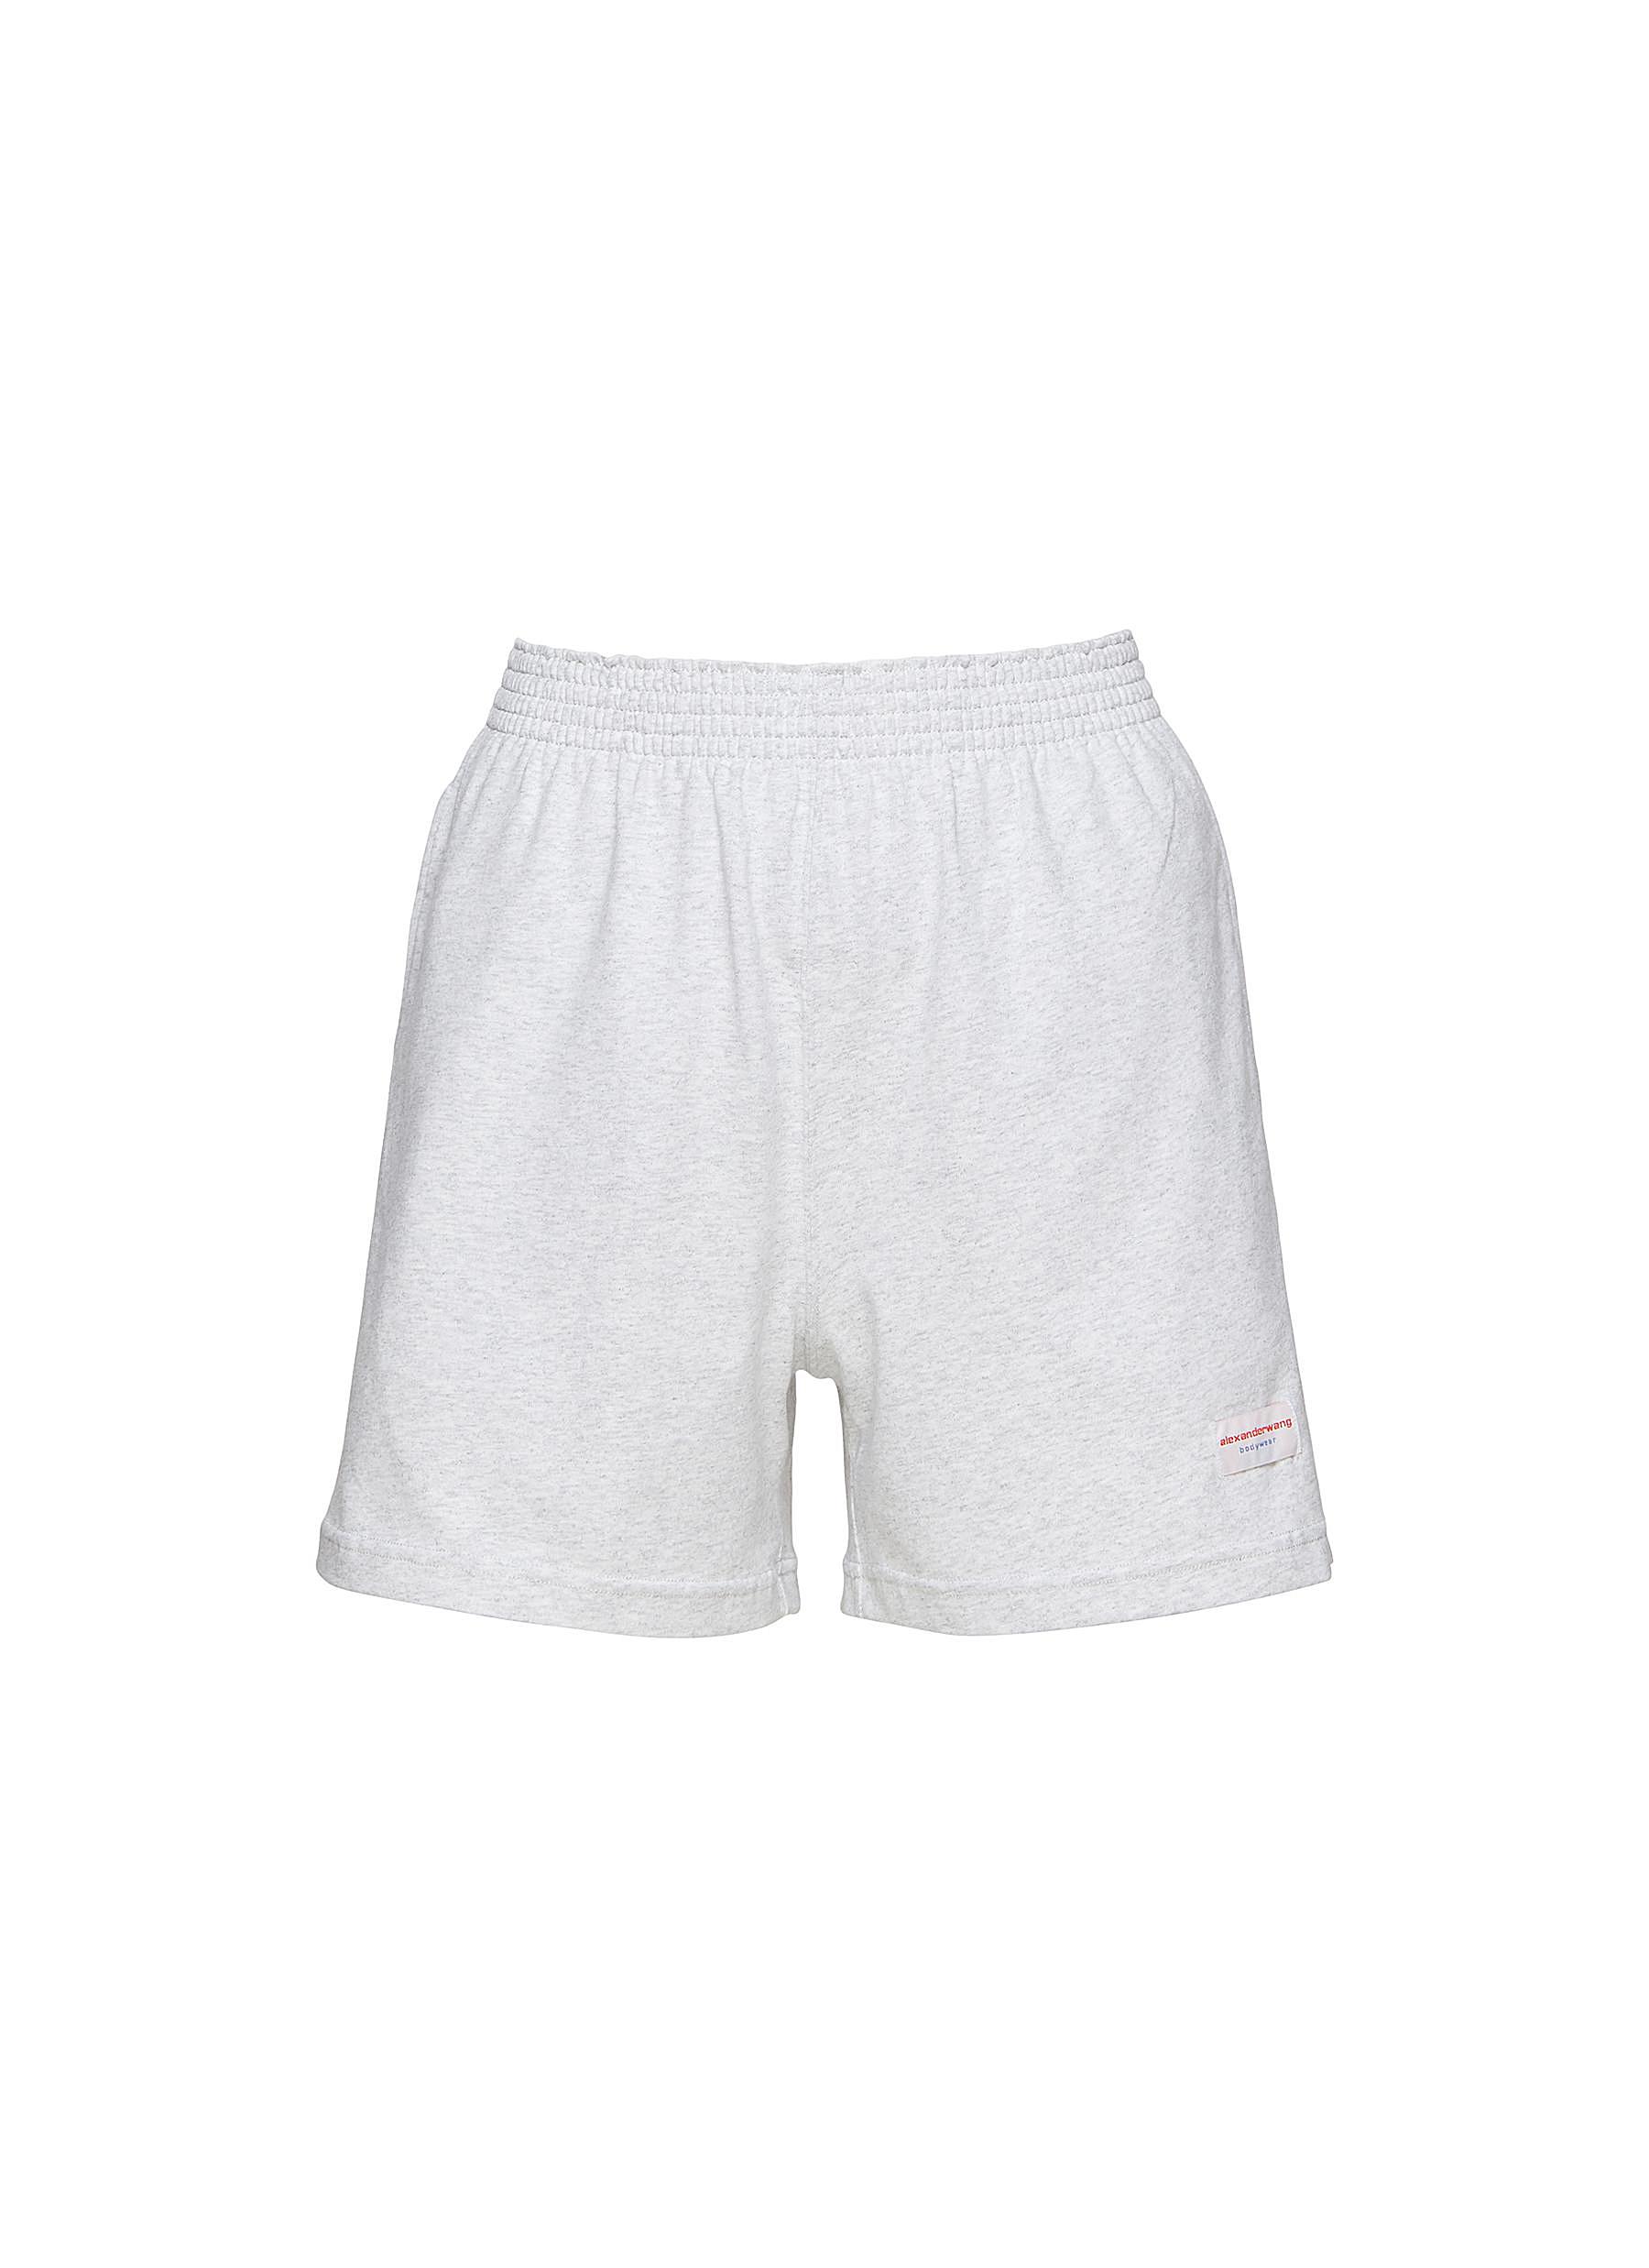 ALEXANDER WANG | Cotton Jersey Shorts | LIGHT GREY | Women | Lane